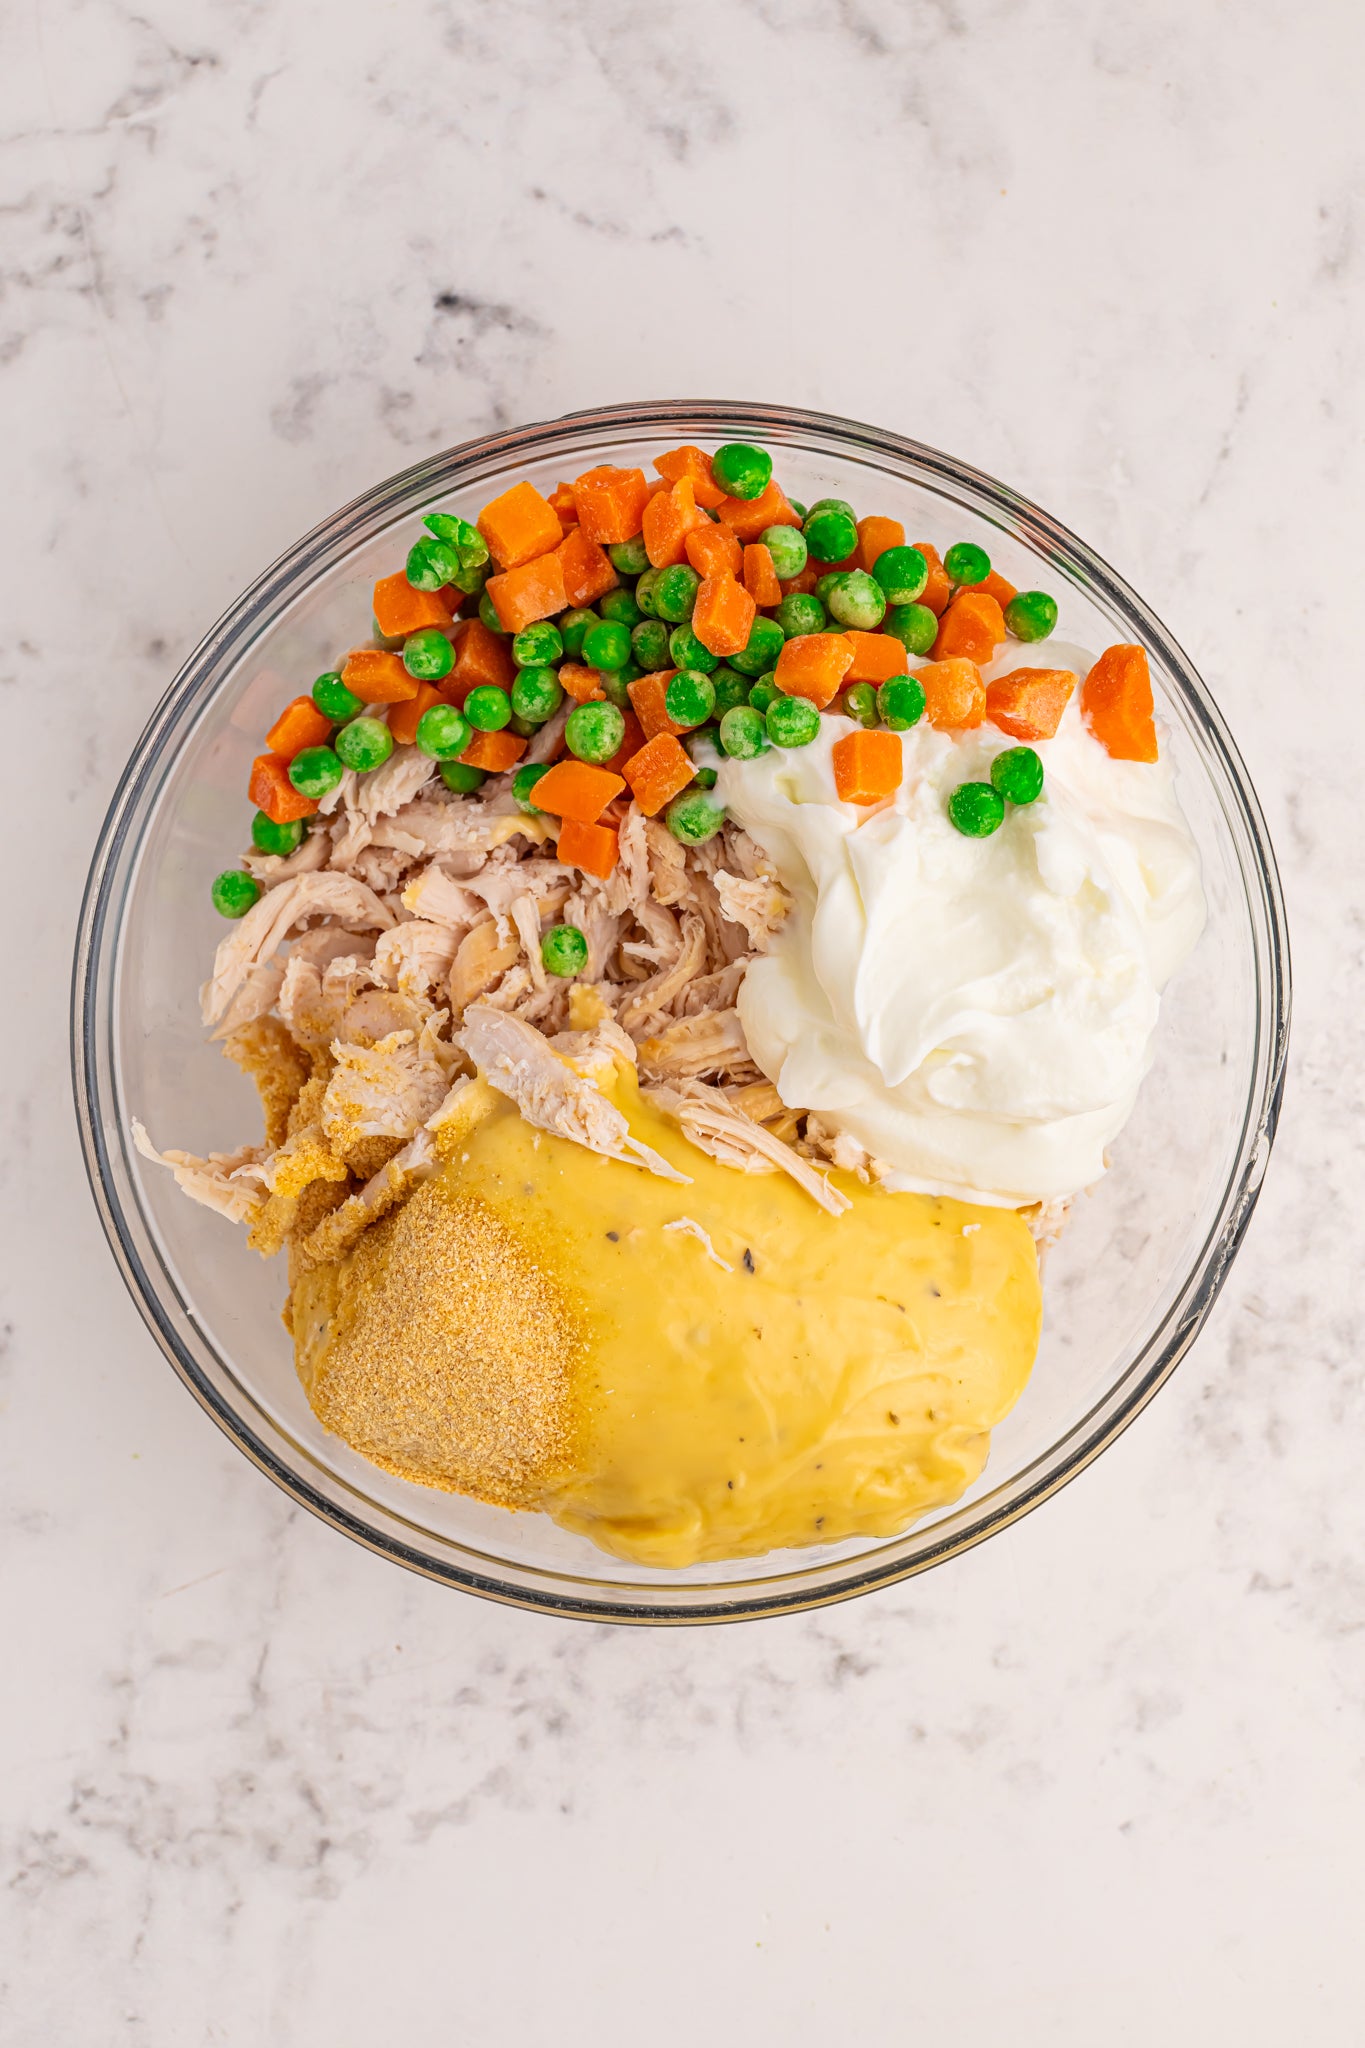 x SALE! Chicken Pot Pie Bake Set 2 - Semi-Exclusive Recipe